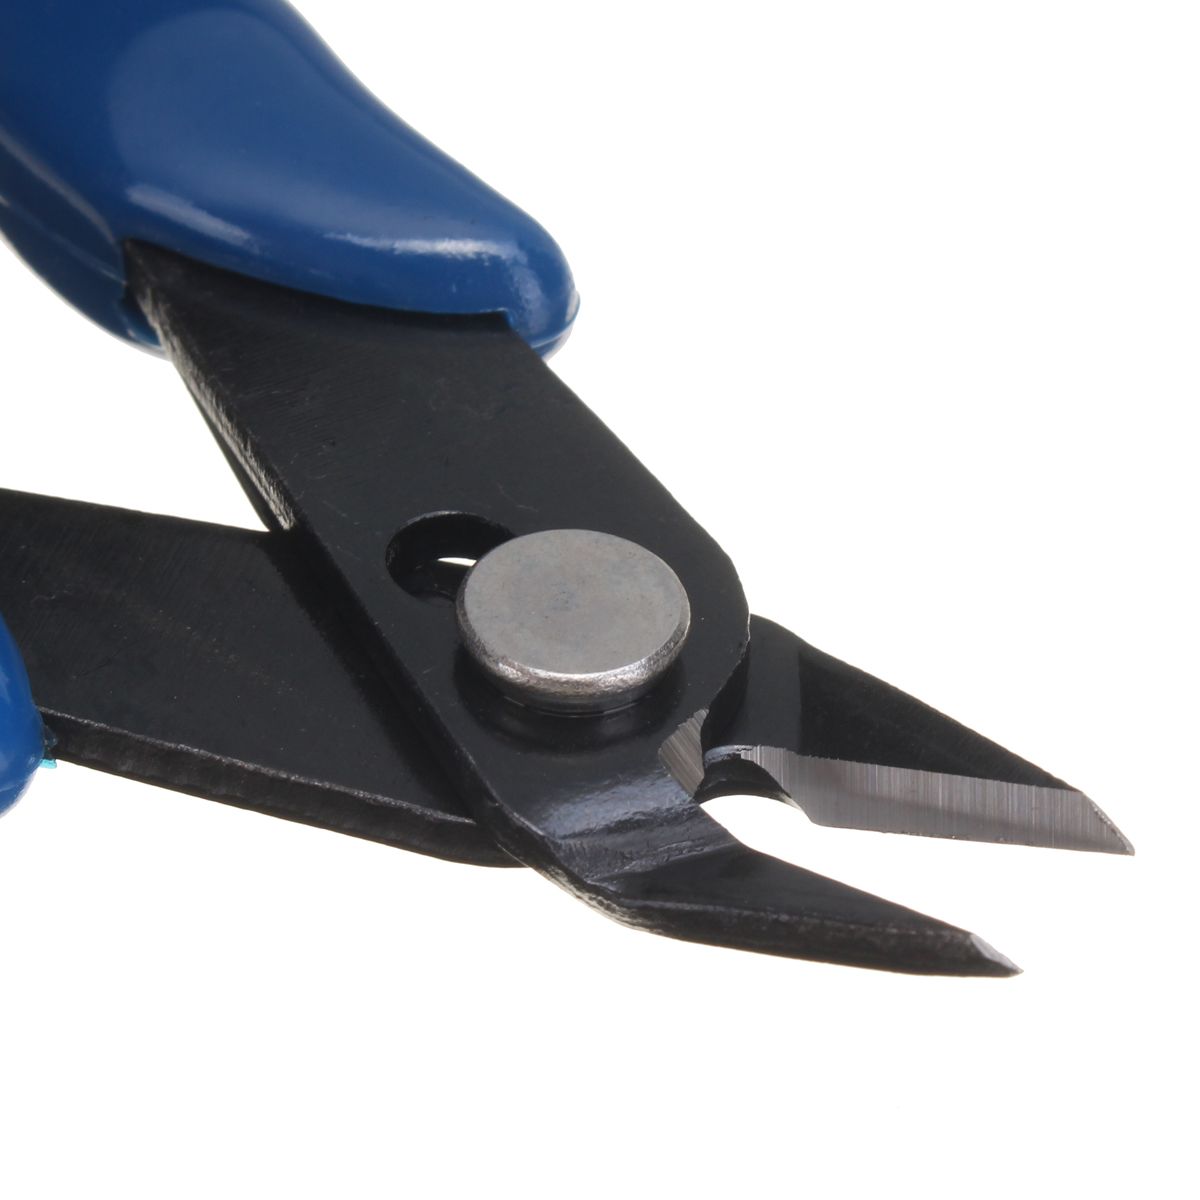 Pliers-Stripping-Tools-Electronic-Cigarette-DIY-Tool-Kit-for-RDA-RBA-RTA-DIY-Vape-Pliers-Tool-1313431